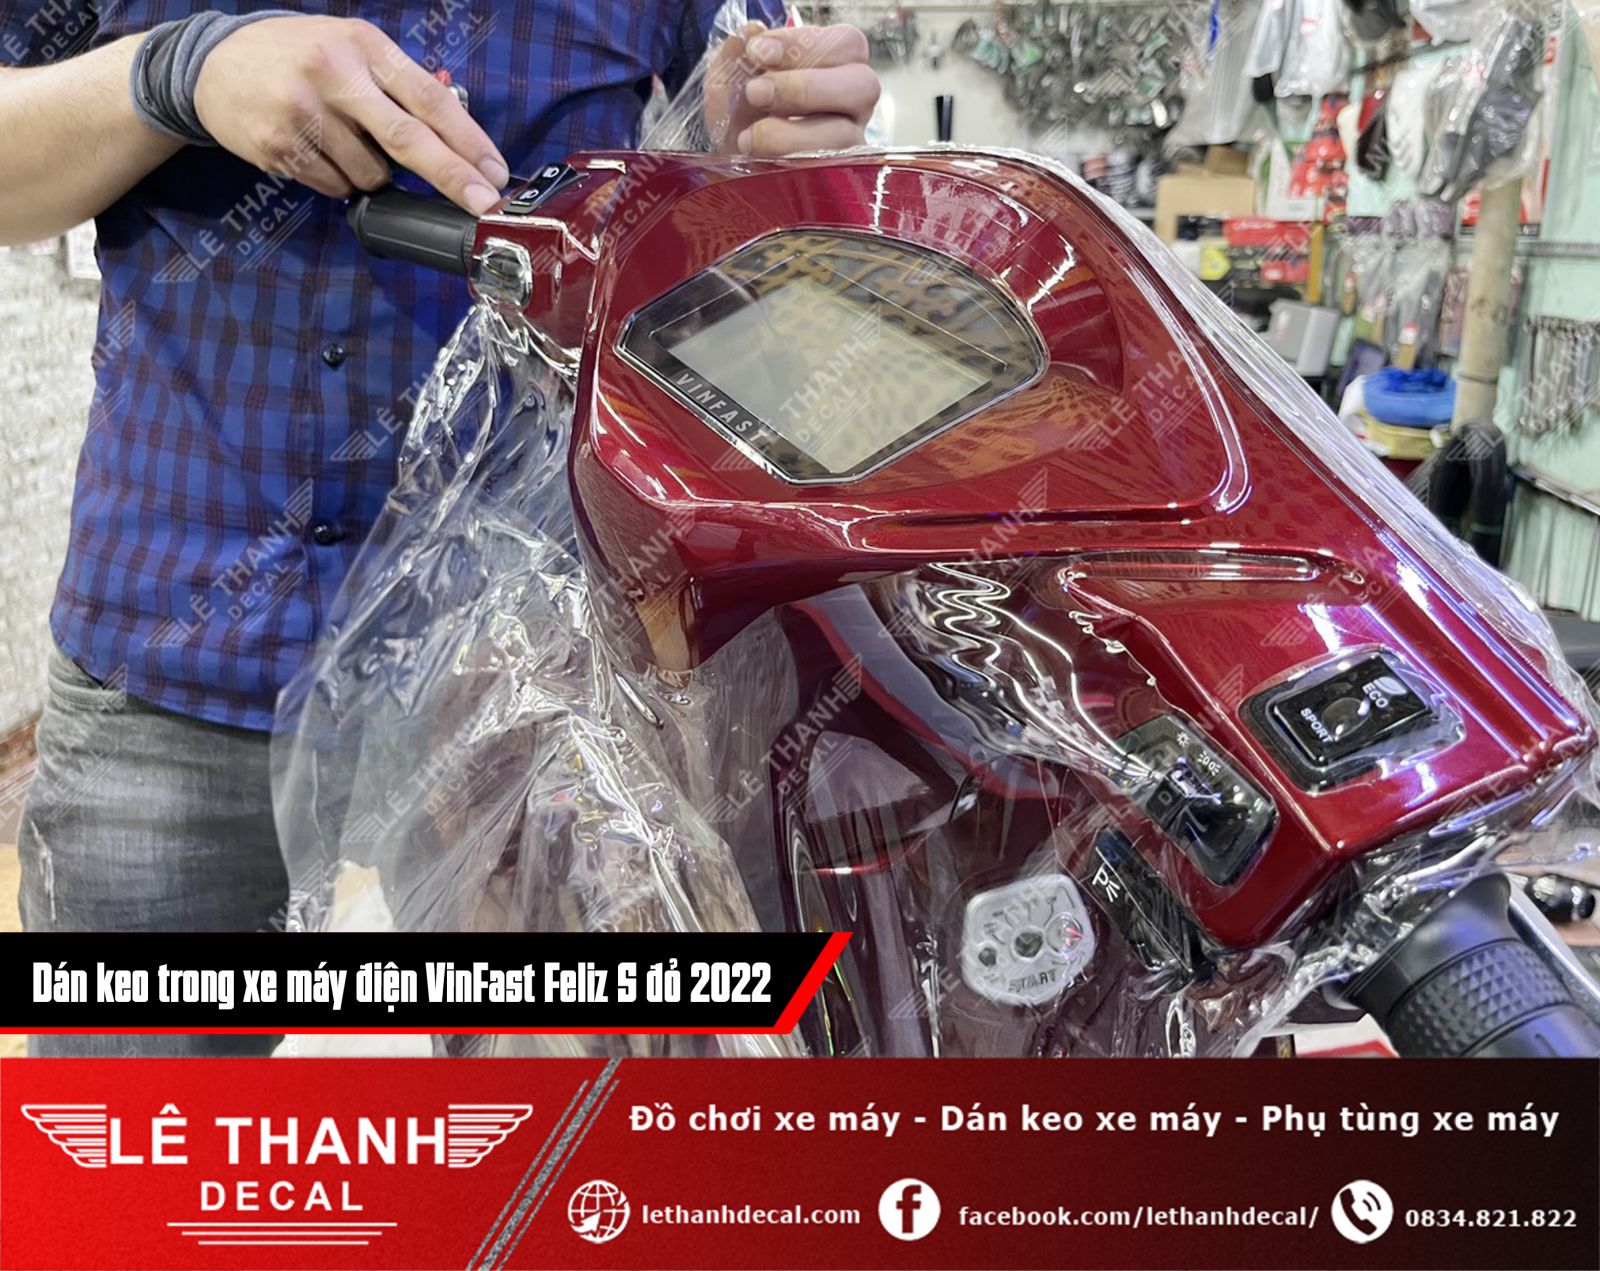 dán keo trong xe máy điện VinFast Feliz S 2022 đỏ 